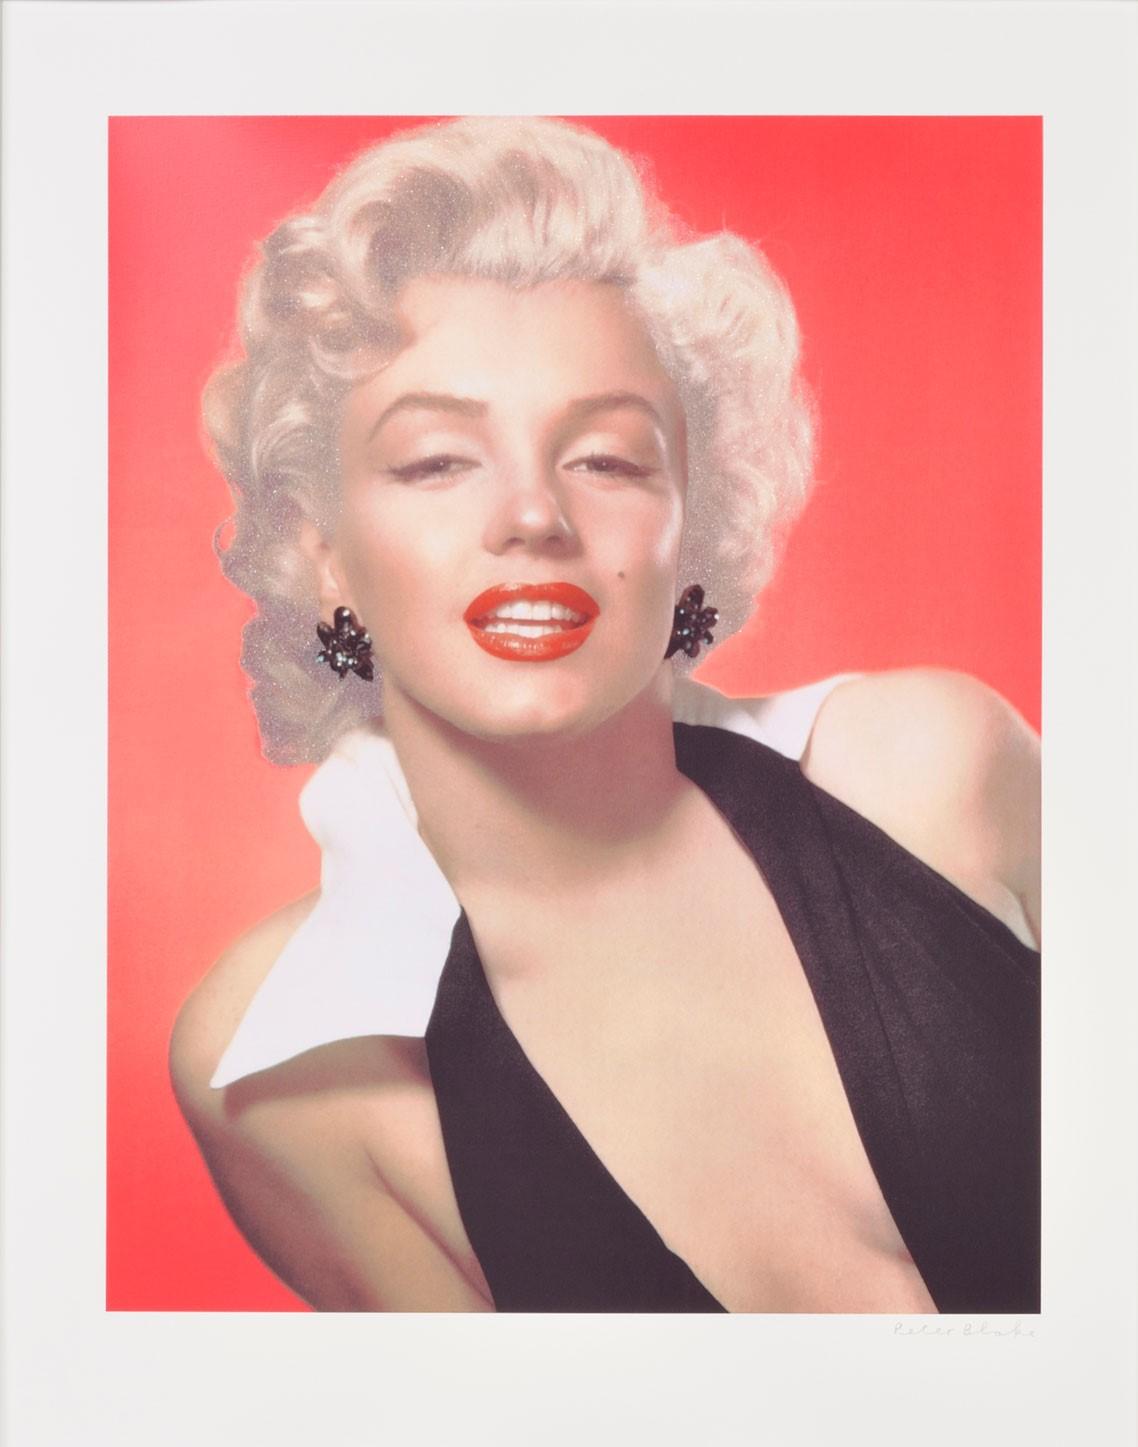 Peter Blake Portrait Print - Marilyn - Contemporary 21st Century, Silkscreen, Diamond Dust, Limited Edition